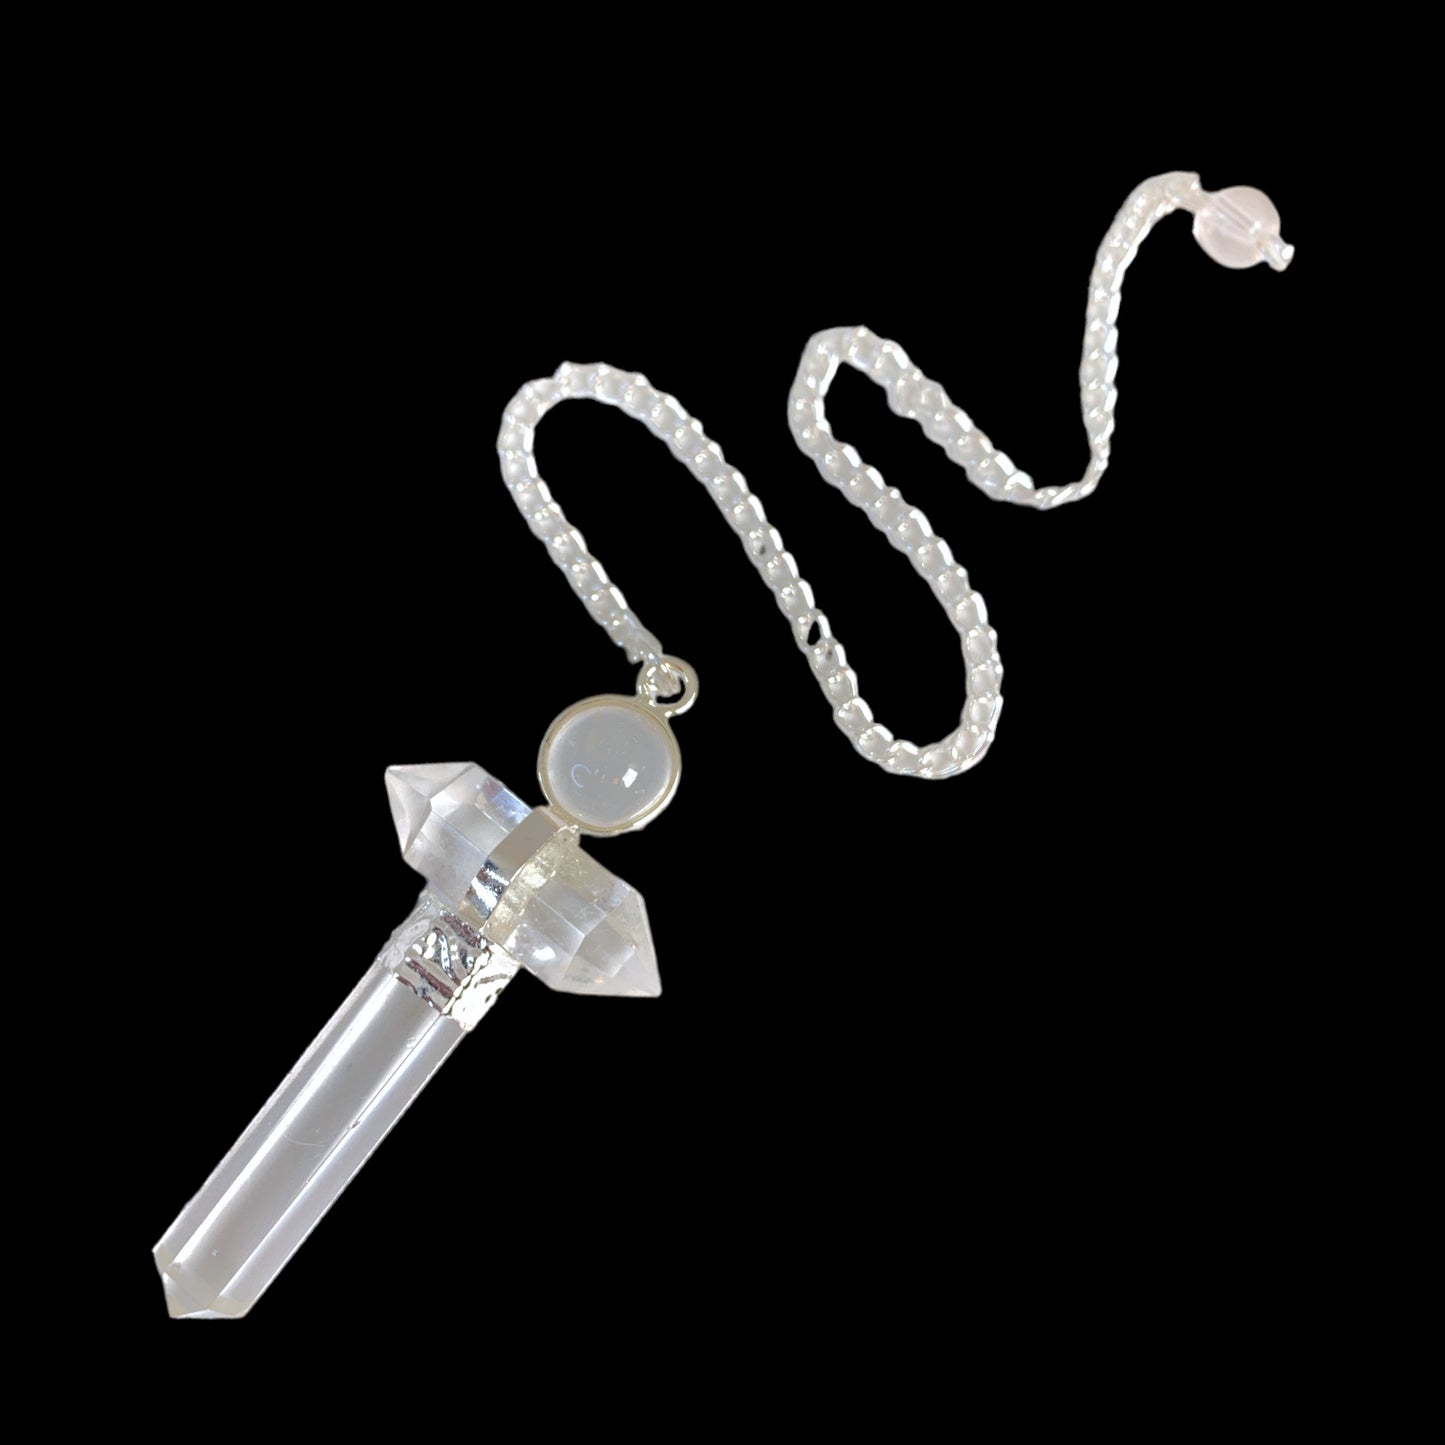 Clear Quartz 3 Piece Herkimer Pendulum with Chain - 40-45mm - 25g - NEW422